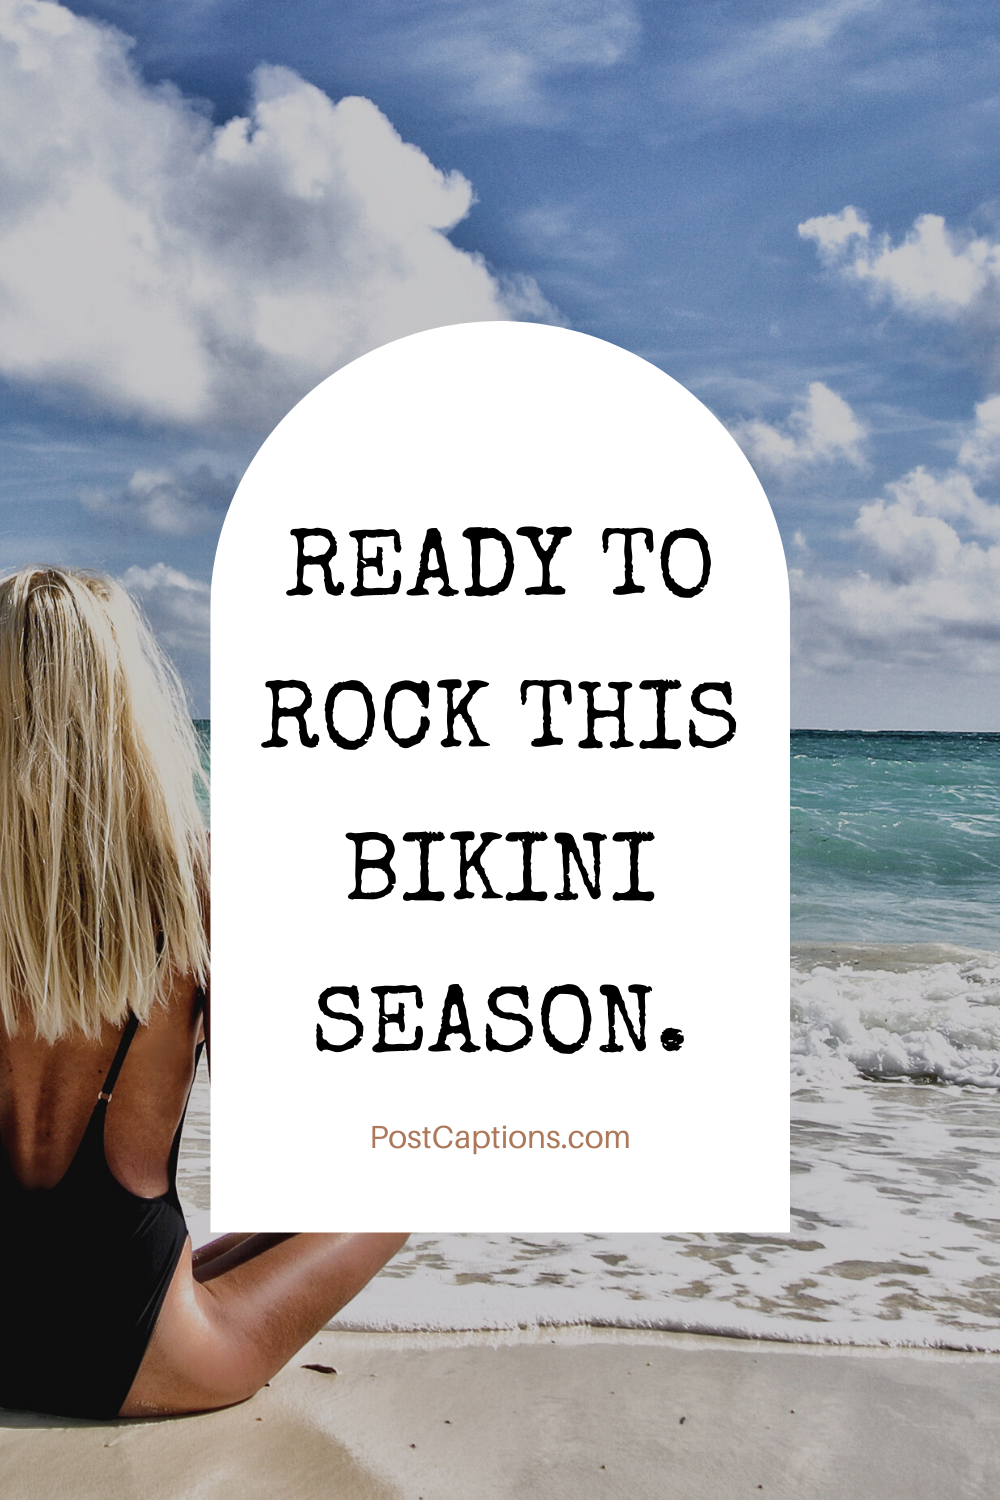 Bikini Instagram captions